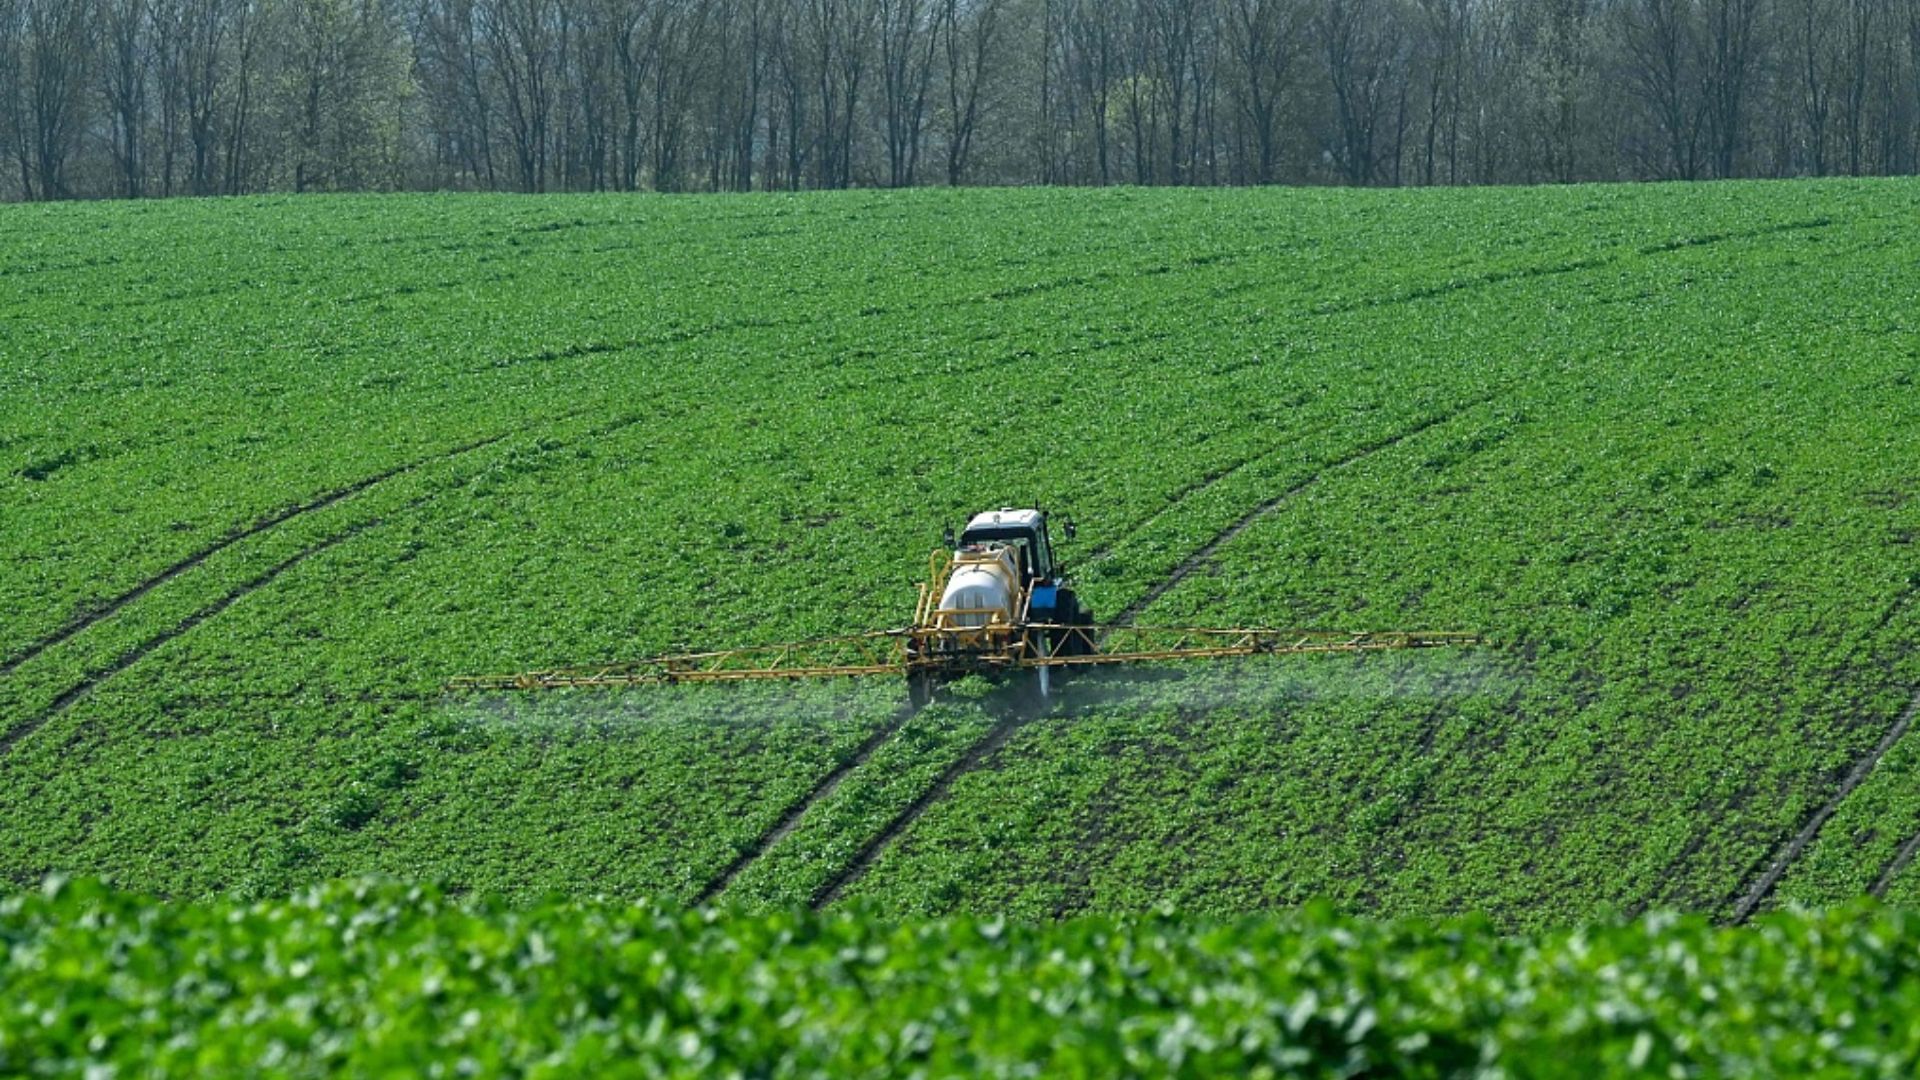 Spraying fertilizer on the farm is damaging to birdlife, say environmentalists. /Sergei Supinsky/CFP